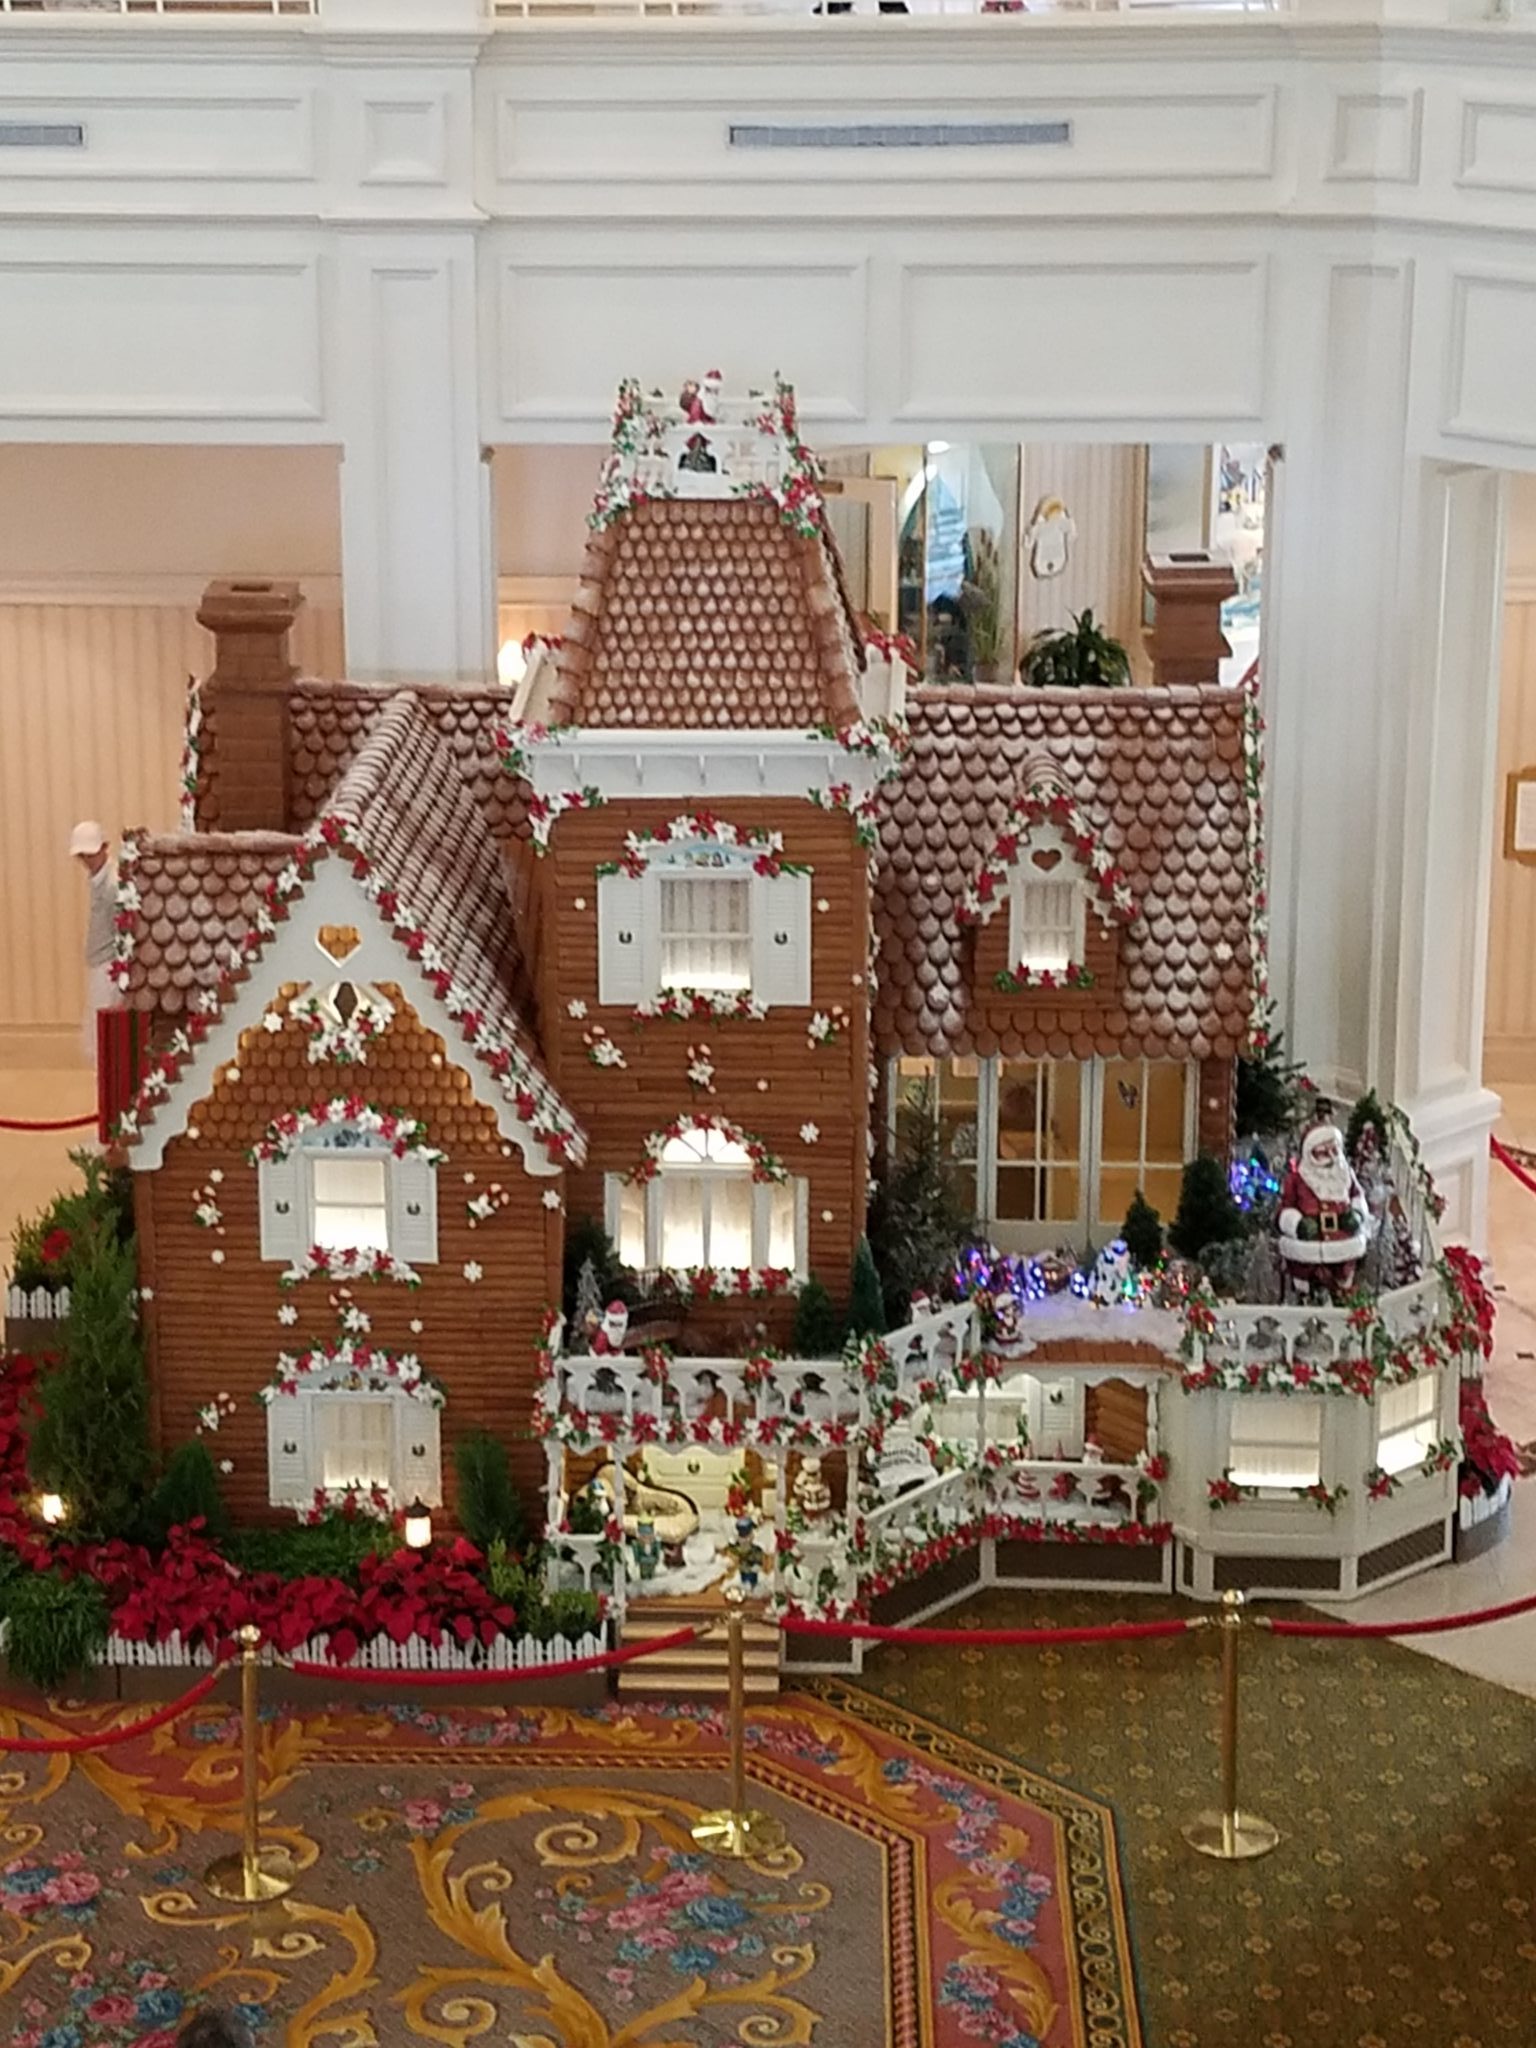 Gingerbread Christmas Displays To Appear at Walt Disney World Soon